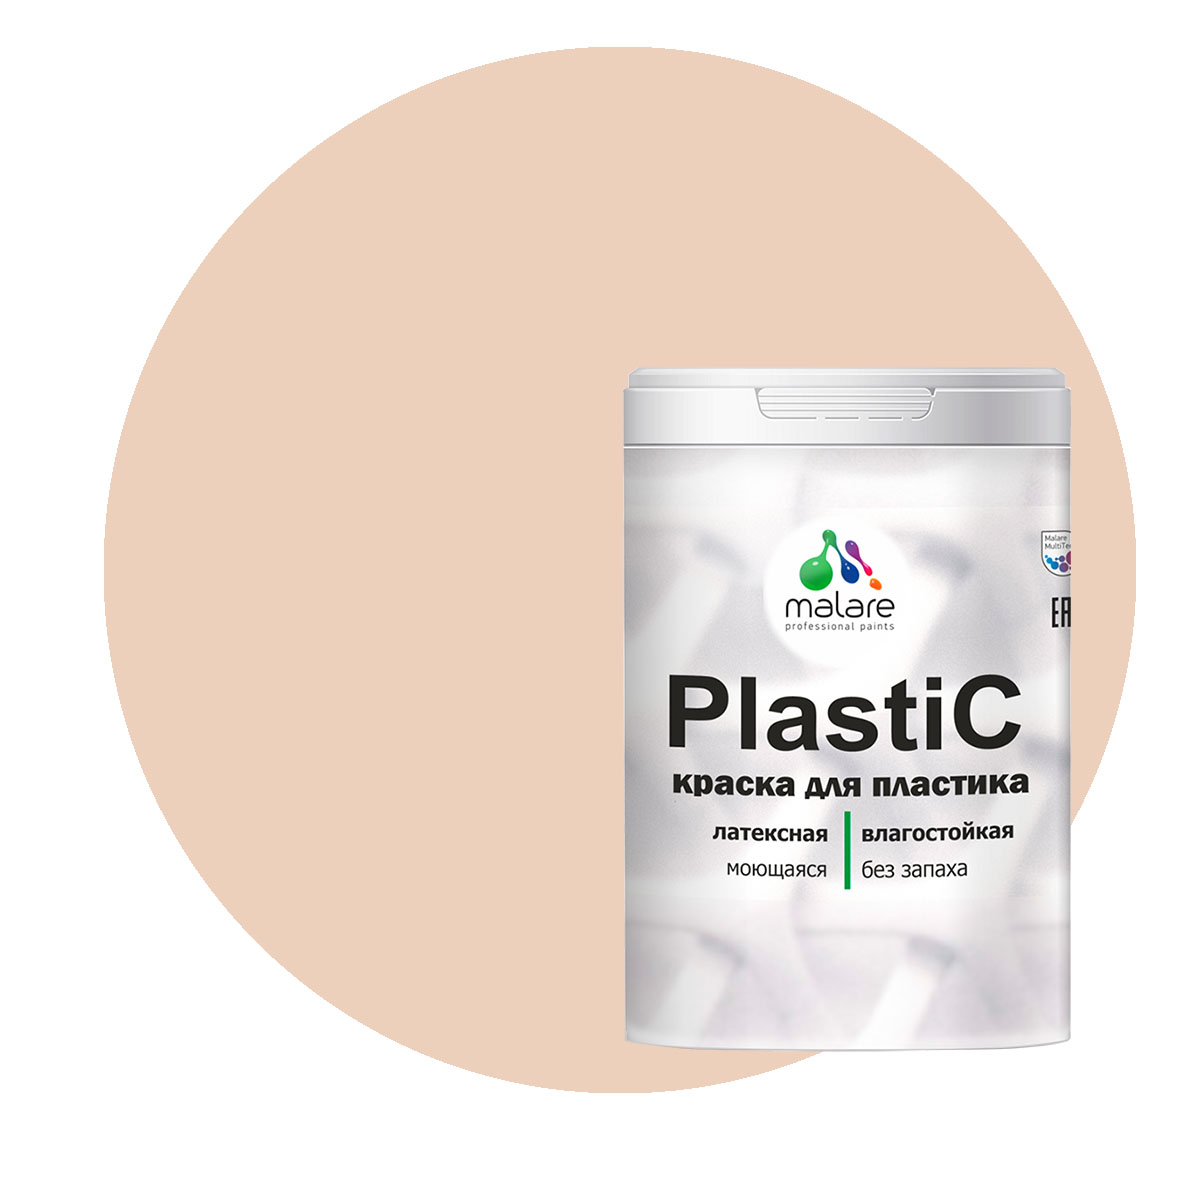 Краска Malare PlastiC для пластика, ПВХ, для сайдинга, эффект дежавю, 2 кг. краска malare plastic для пластика пвх для сайдинга розовый пион 10 кг